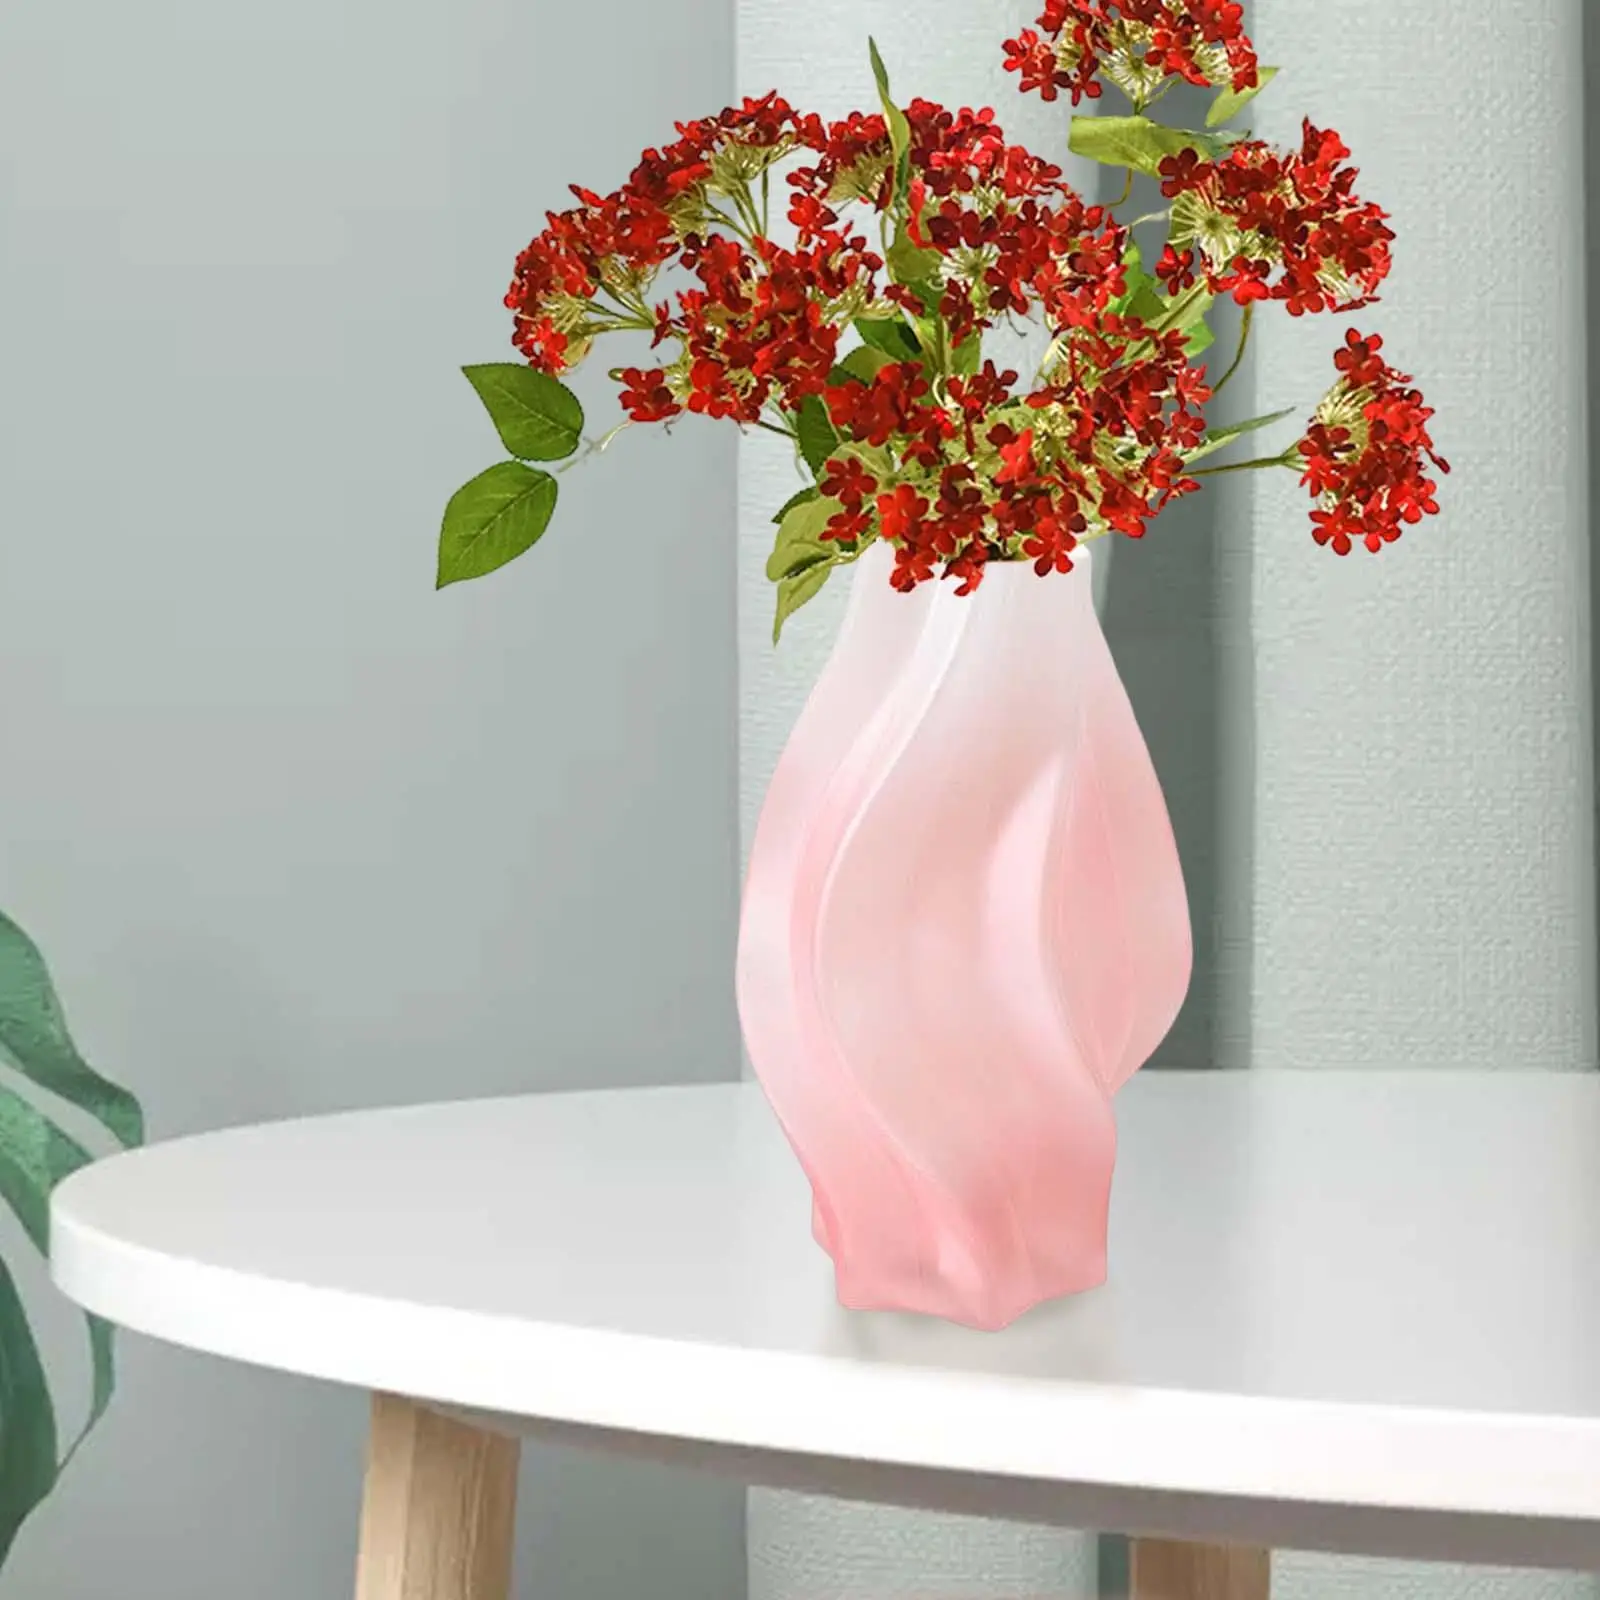 Tornado Shaped Glass Vase Flower Arrangement Container Home Ornaments